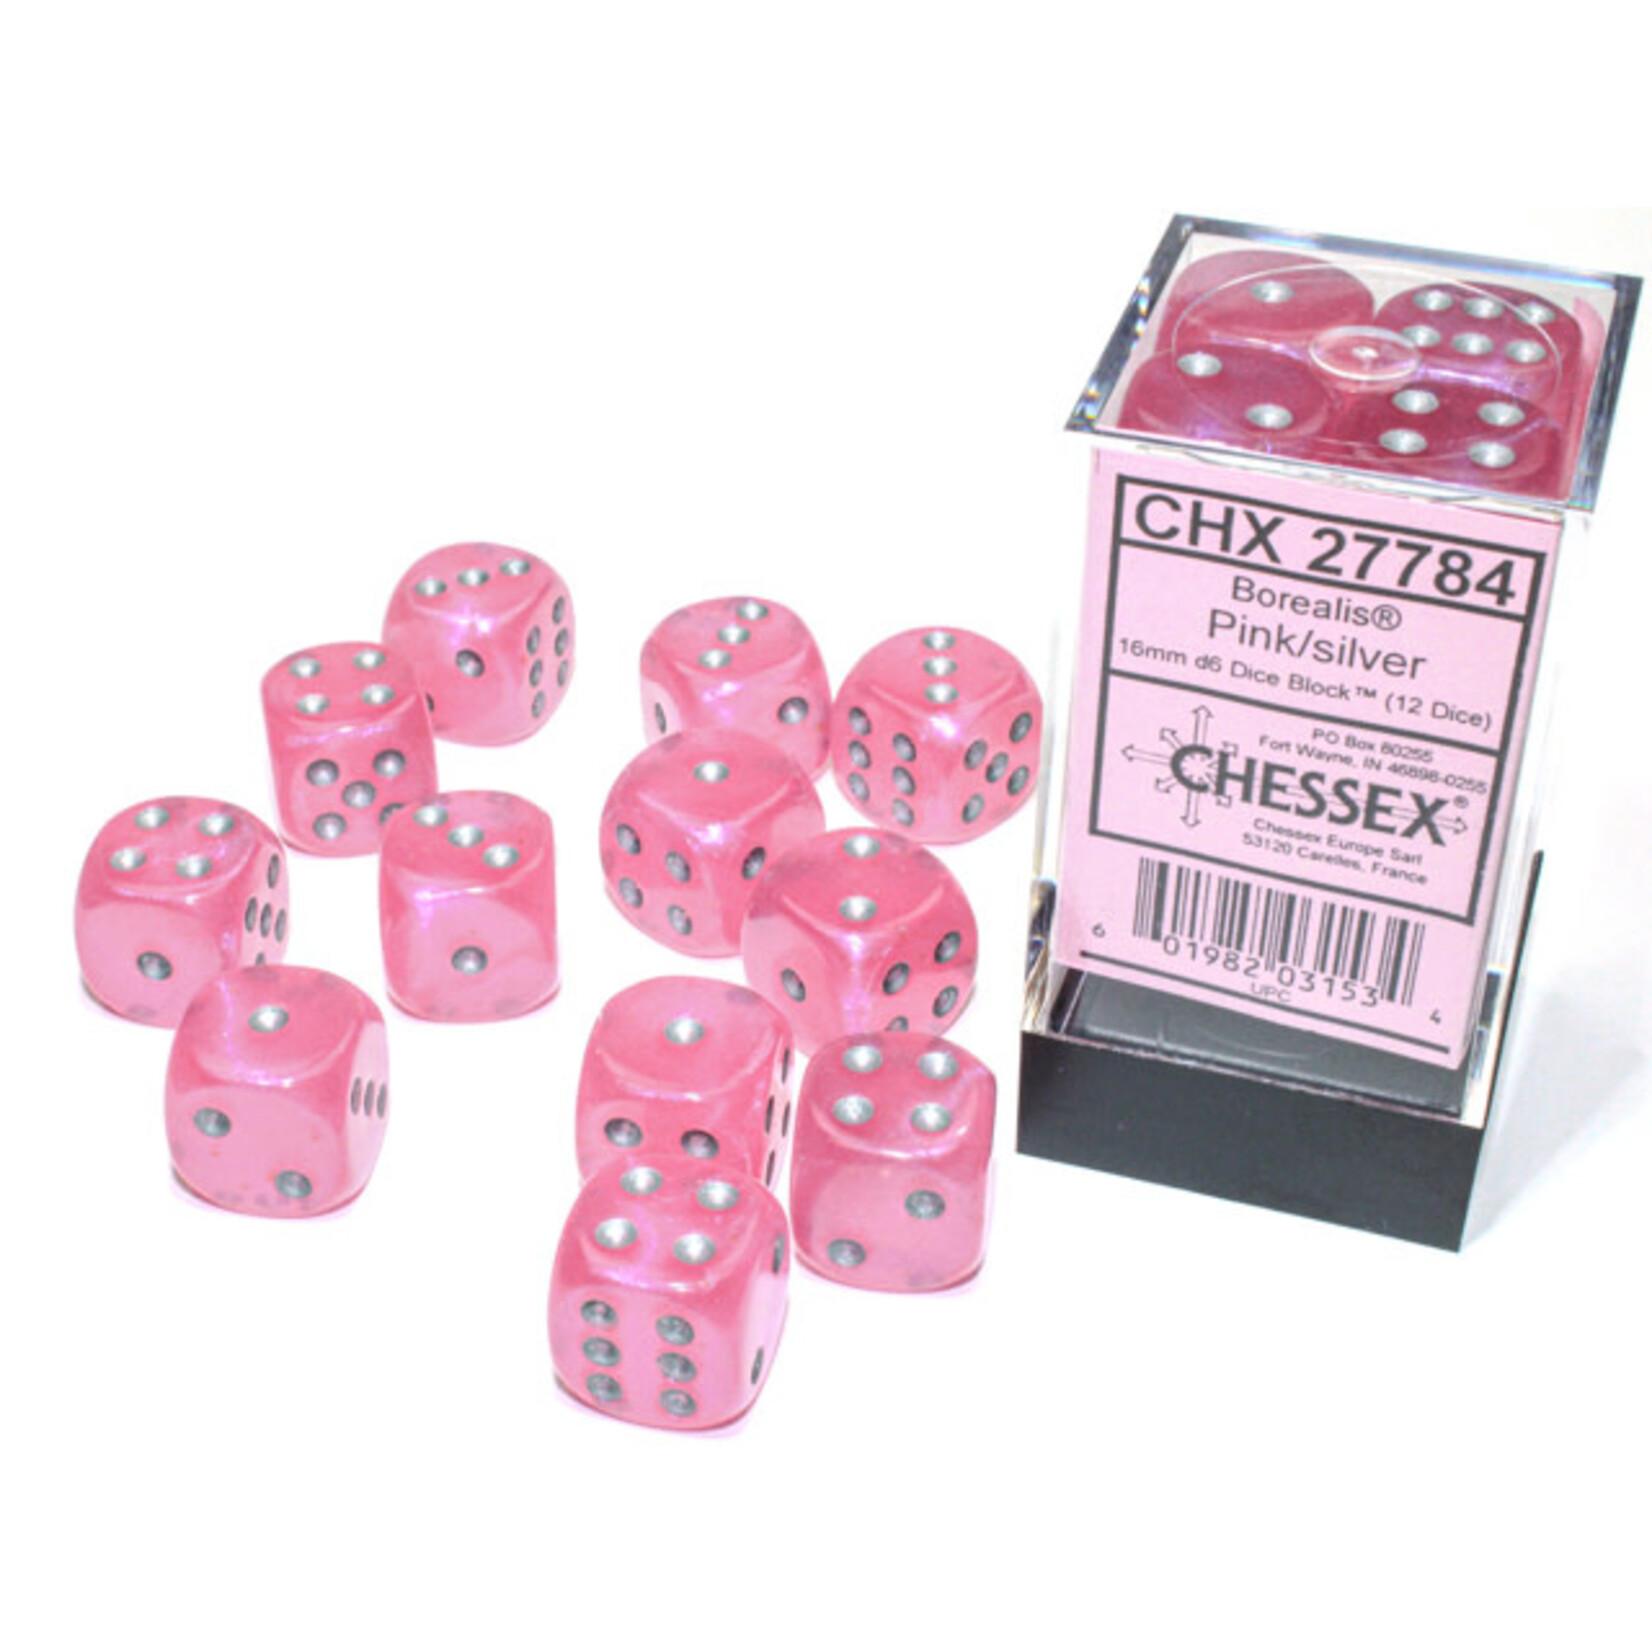 Chessex Borealis Pink/silver Luminary 16mm d6 Dice Block (12 dice)